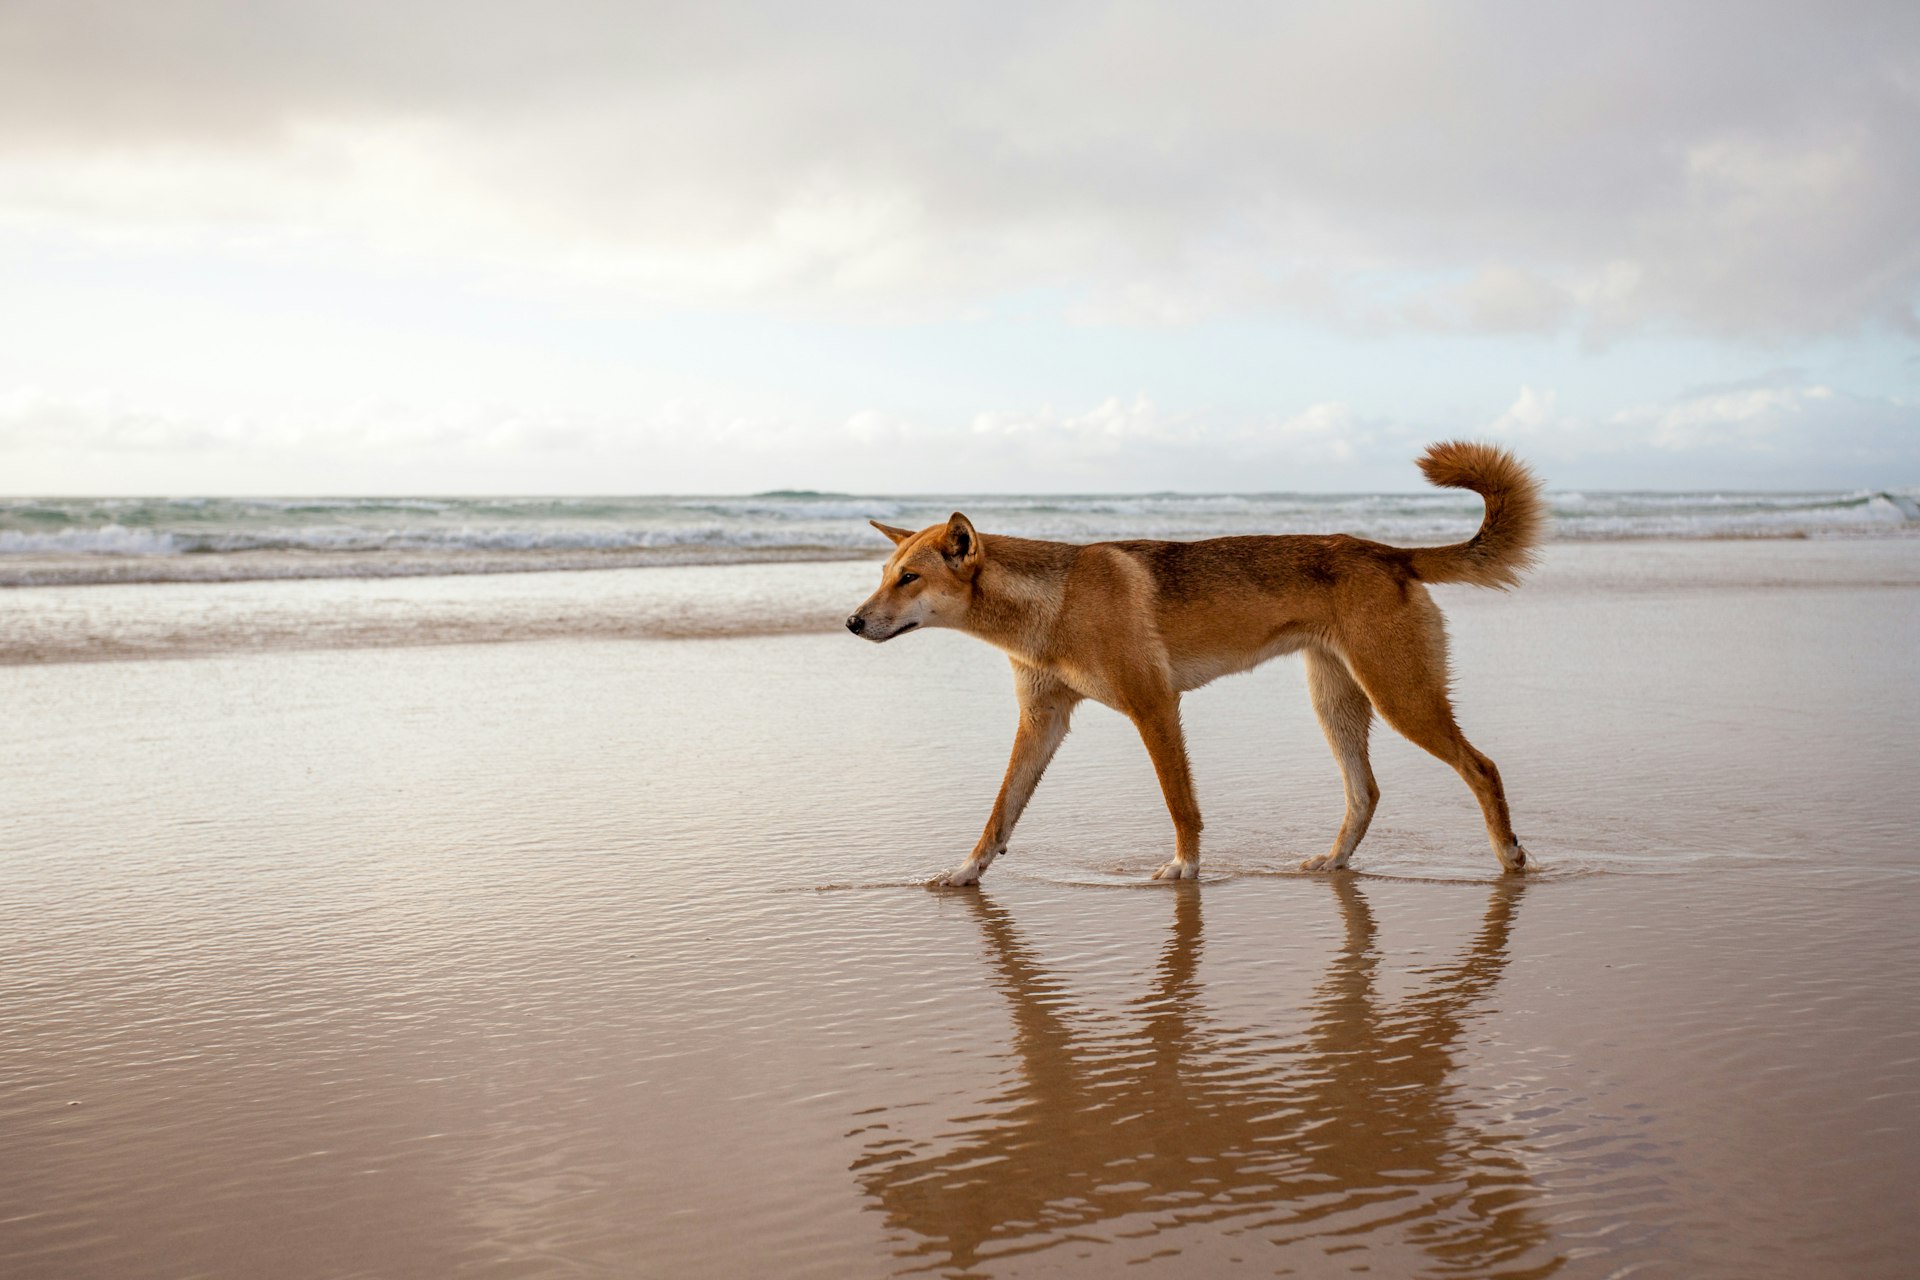 A dingo walks along the tide of a beach.